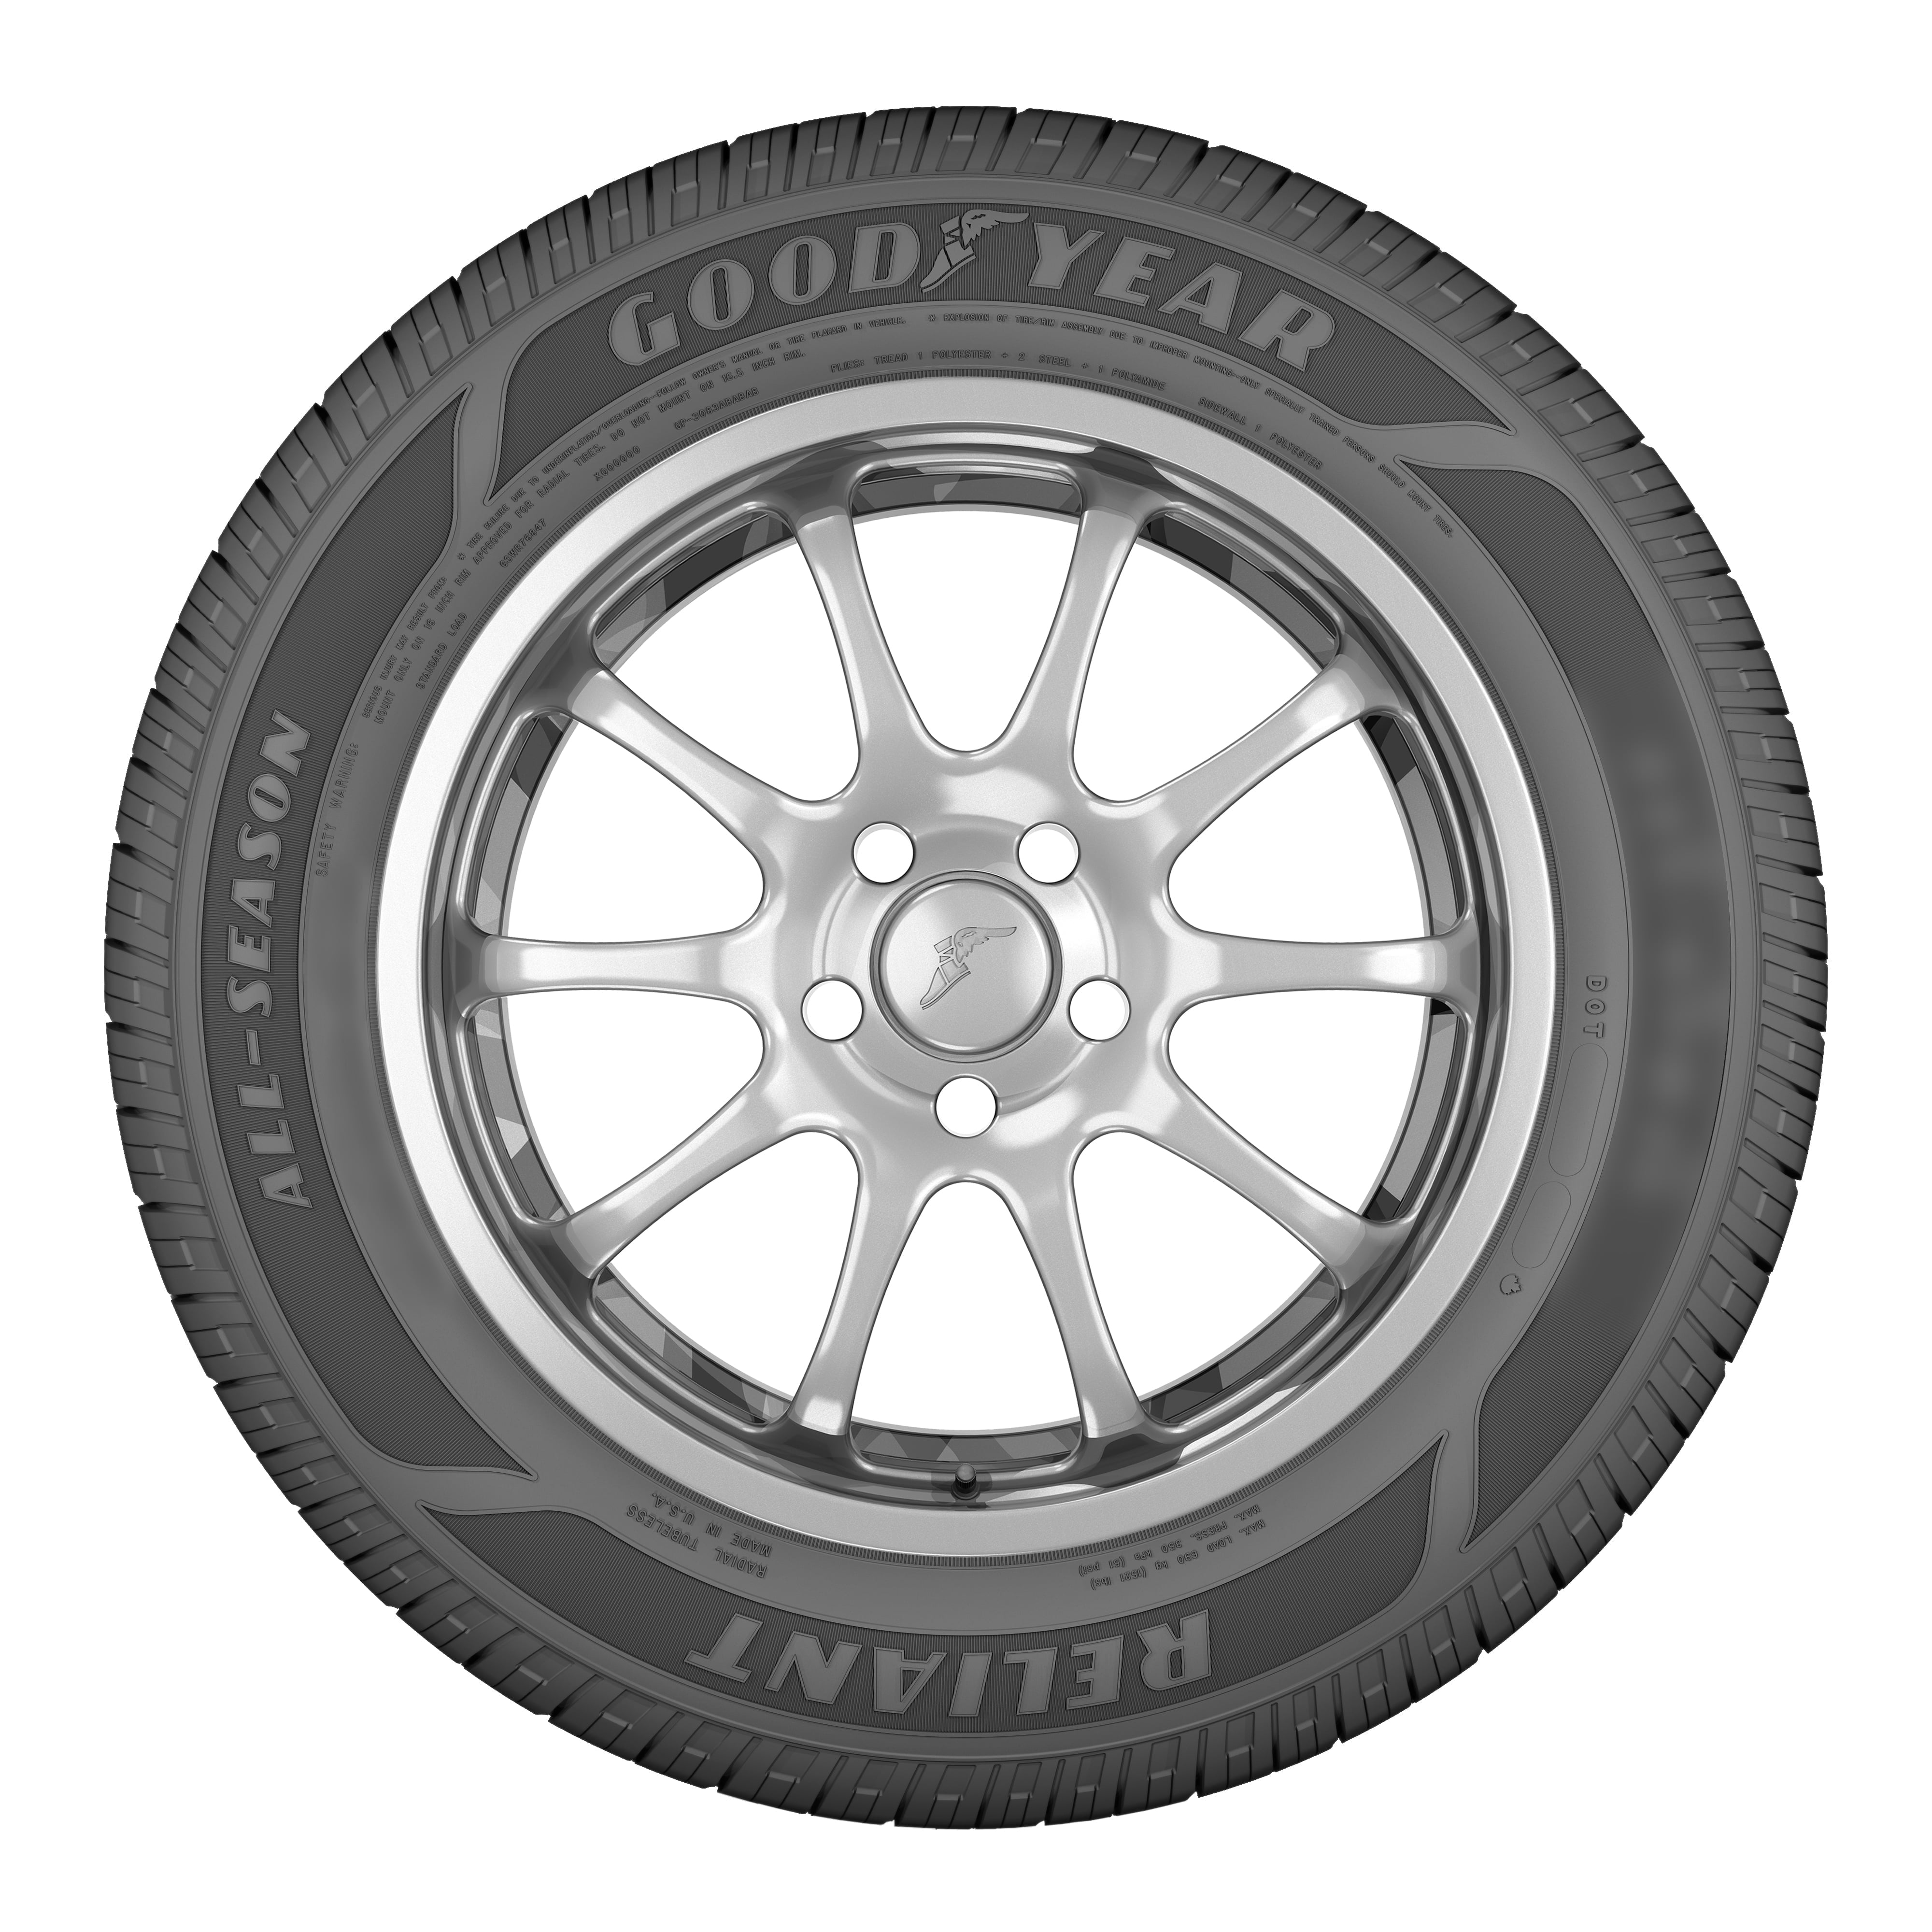 Goodyear Reliant All-Season 225/55R17 97V All-Season Tire